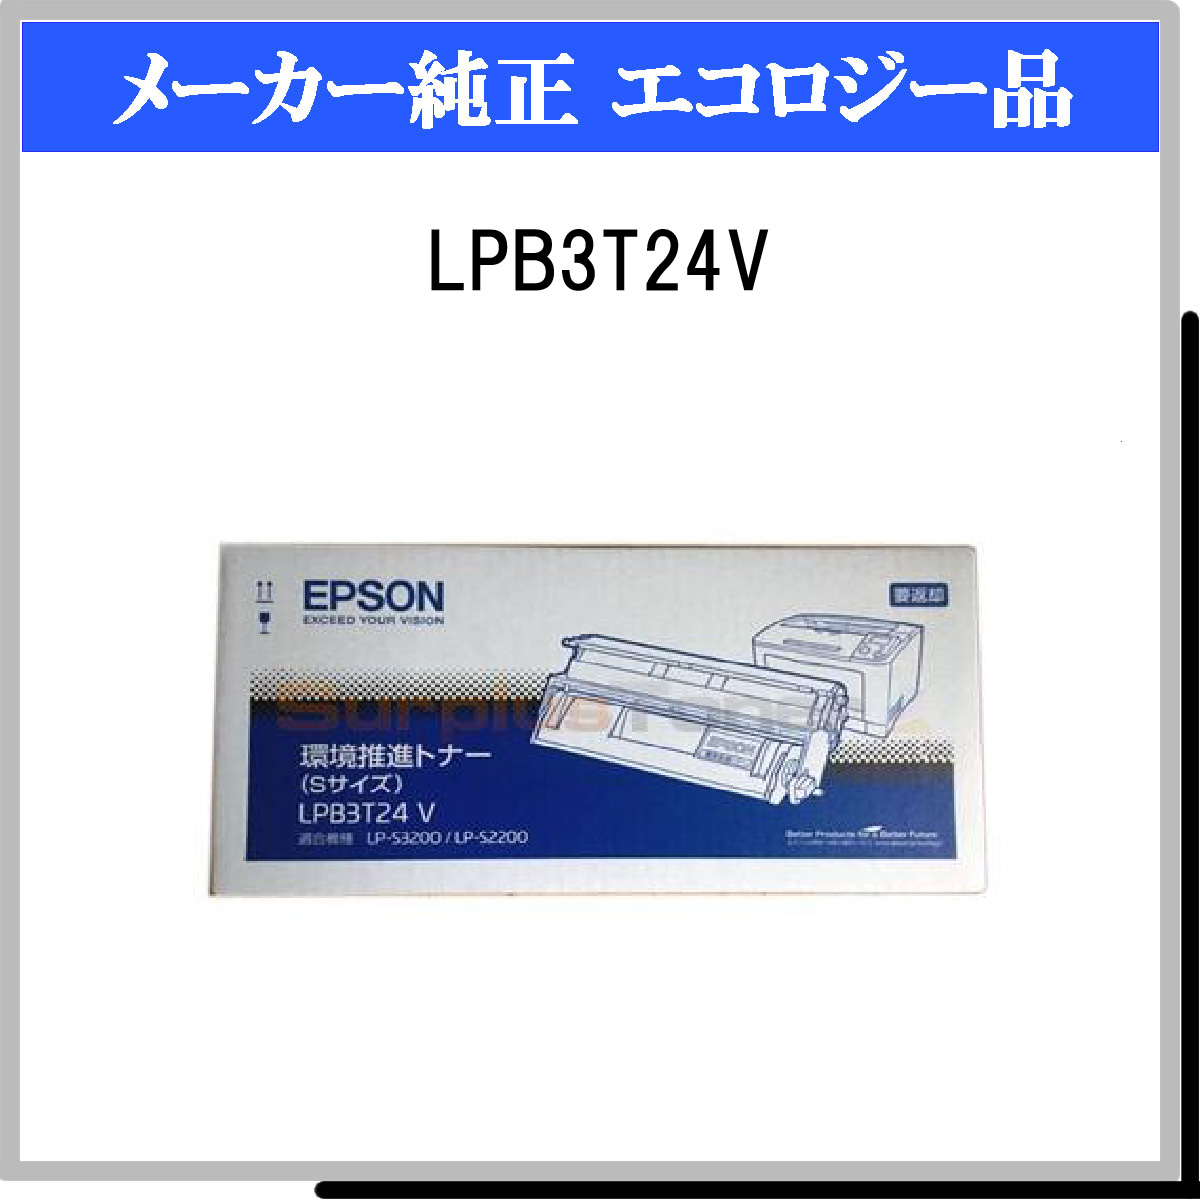 EPSON トナーカートリッジLPB3T24 純正品 LP-S2200 LP-S3200 - 1